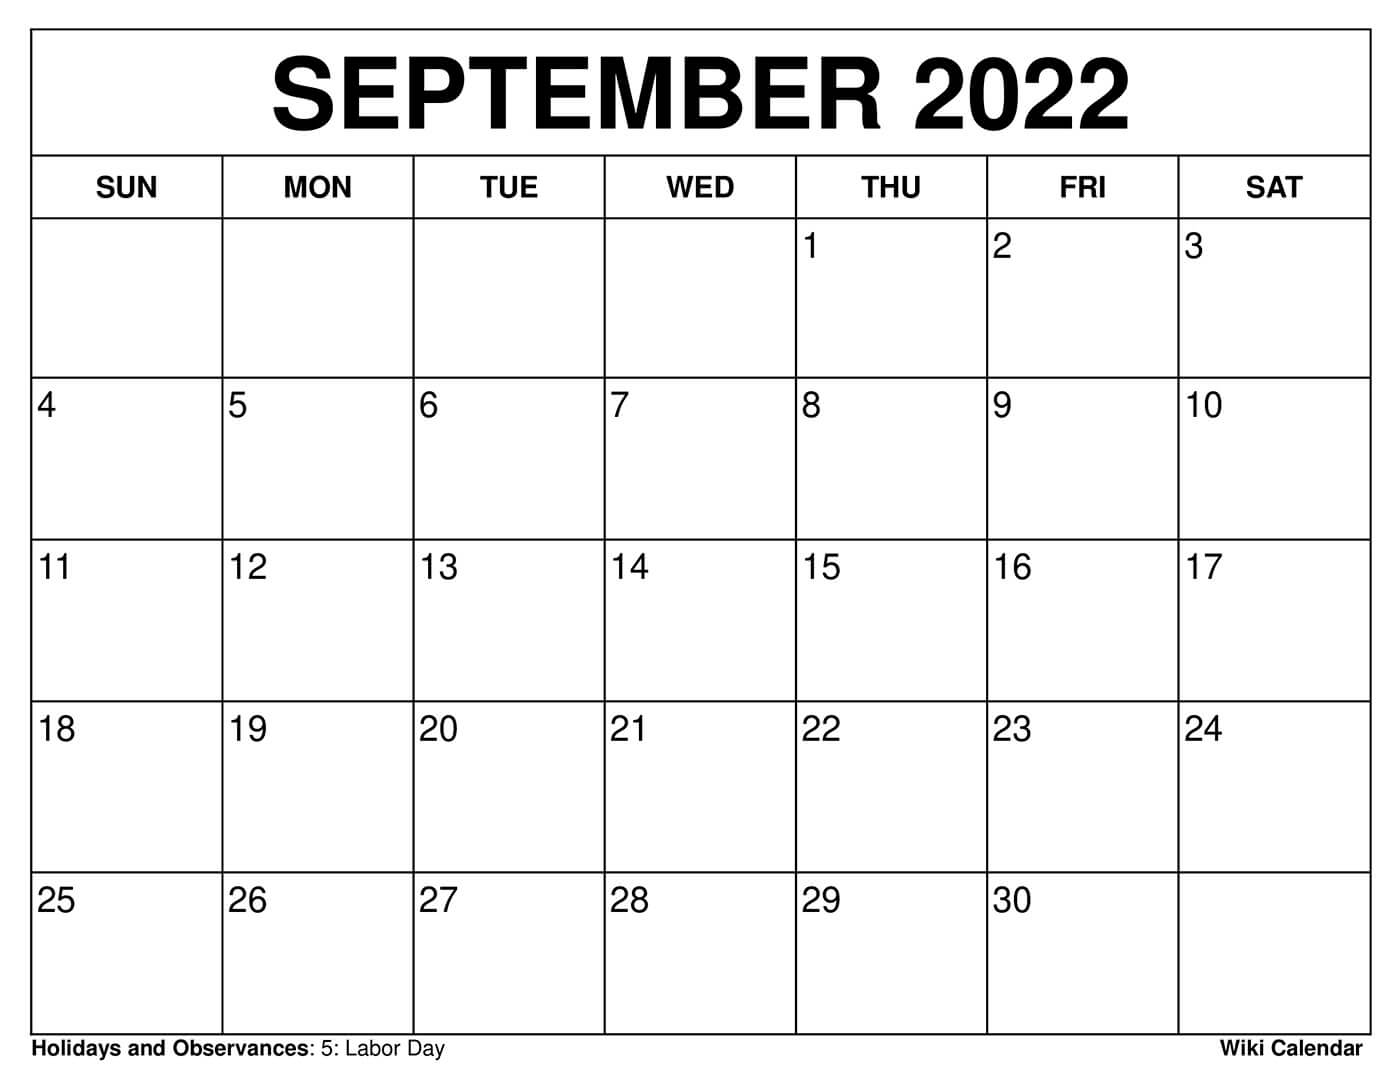 September 2022 Calendar Print Free Printable September 2022 Calendars - Wiki Calendar